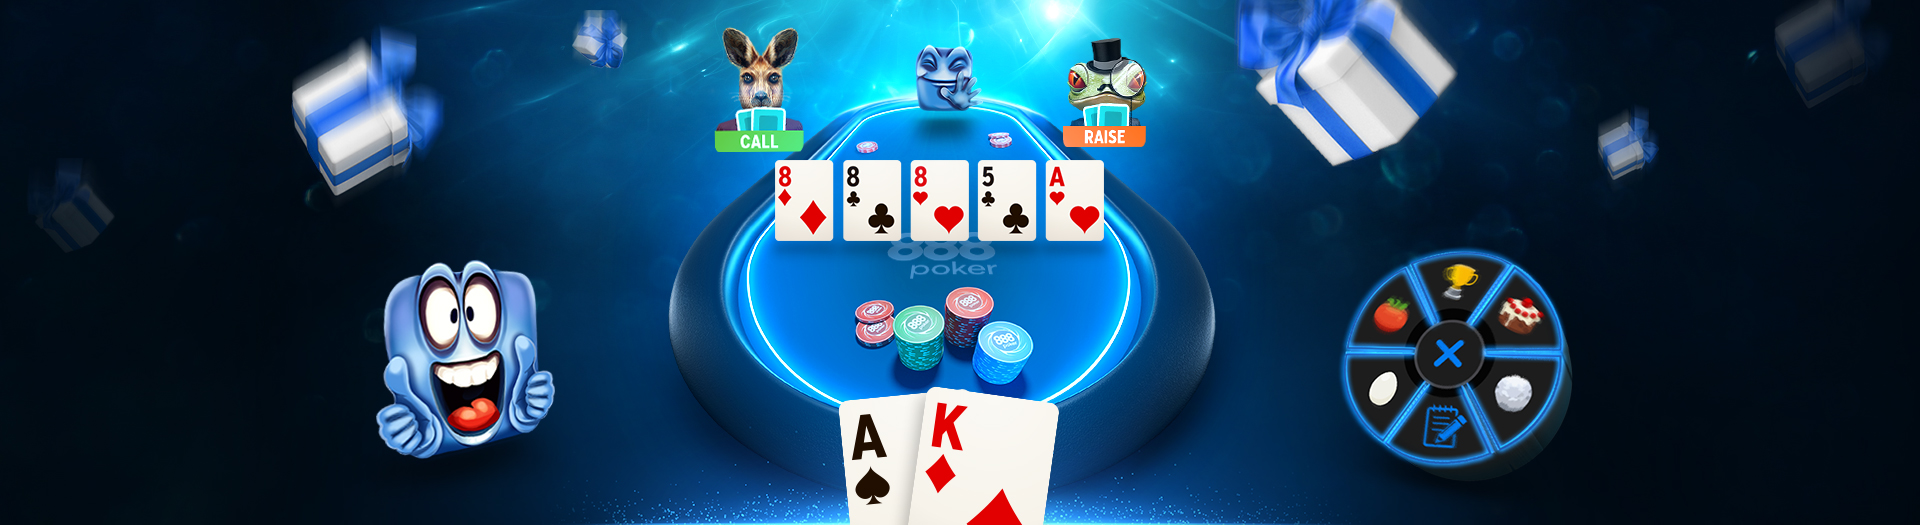 TS-43644-Poker-8-Launch-LP-image-1600767511450_tcm1530-497727